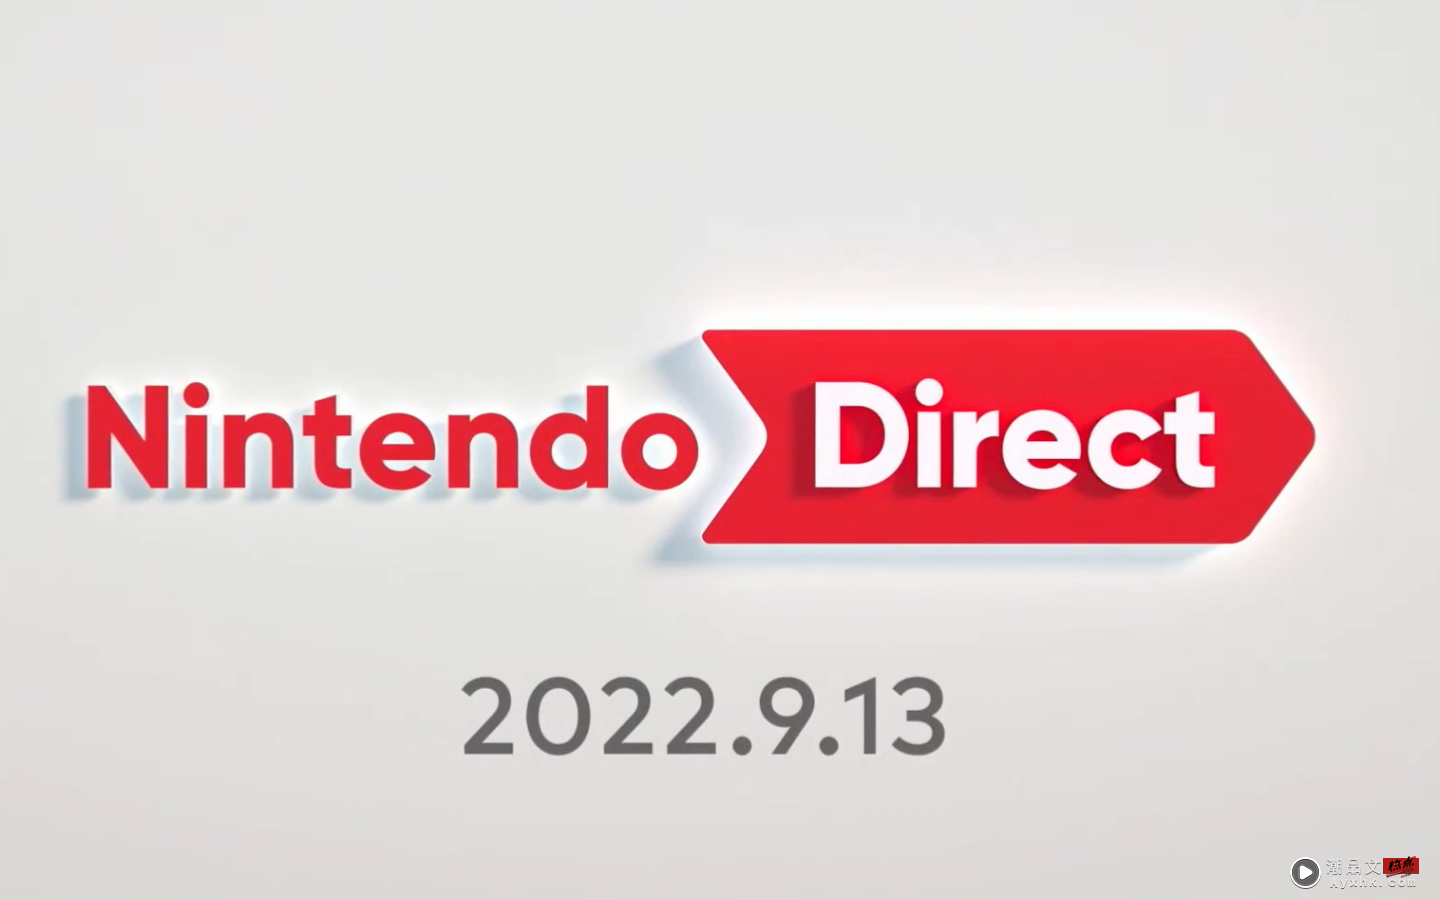 Nintendo Direct 2022 发表！《萨尔达传说》续作、《皮克敏 4》、《牧场物语》、《歧路旅人 2》、《交响传奇》等话题作品都将登场 数码科技 图1张